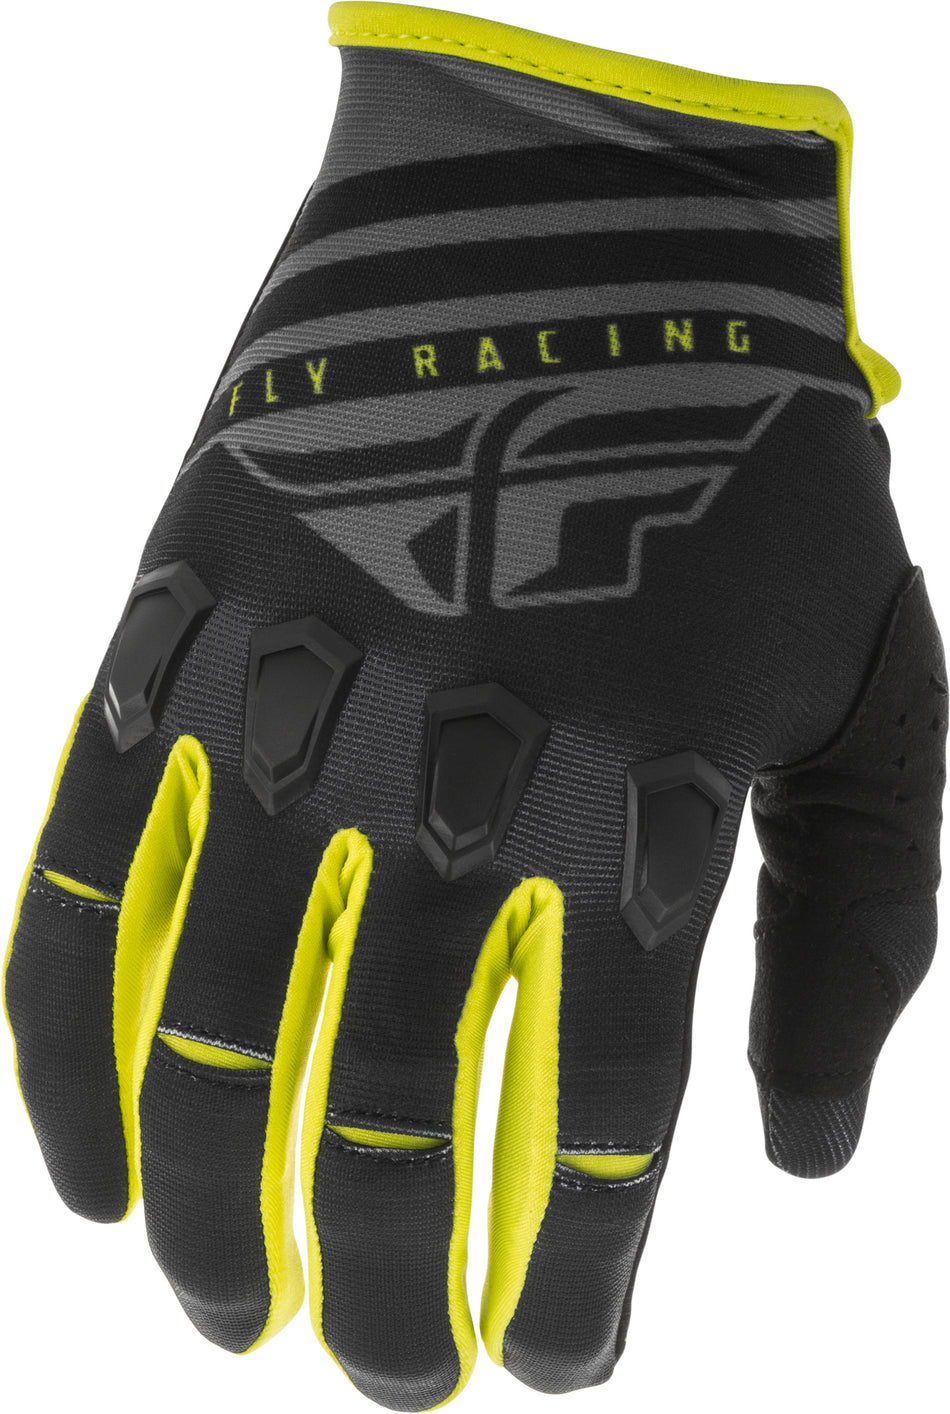 FLY RACING Kinetic K220 Gloves Black/Grey/Hi-Vis Sz 13 373-51513